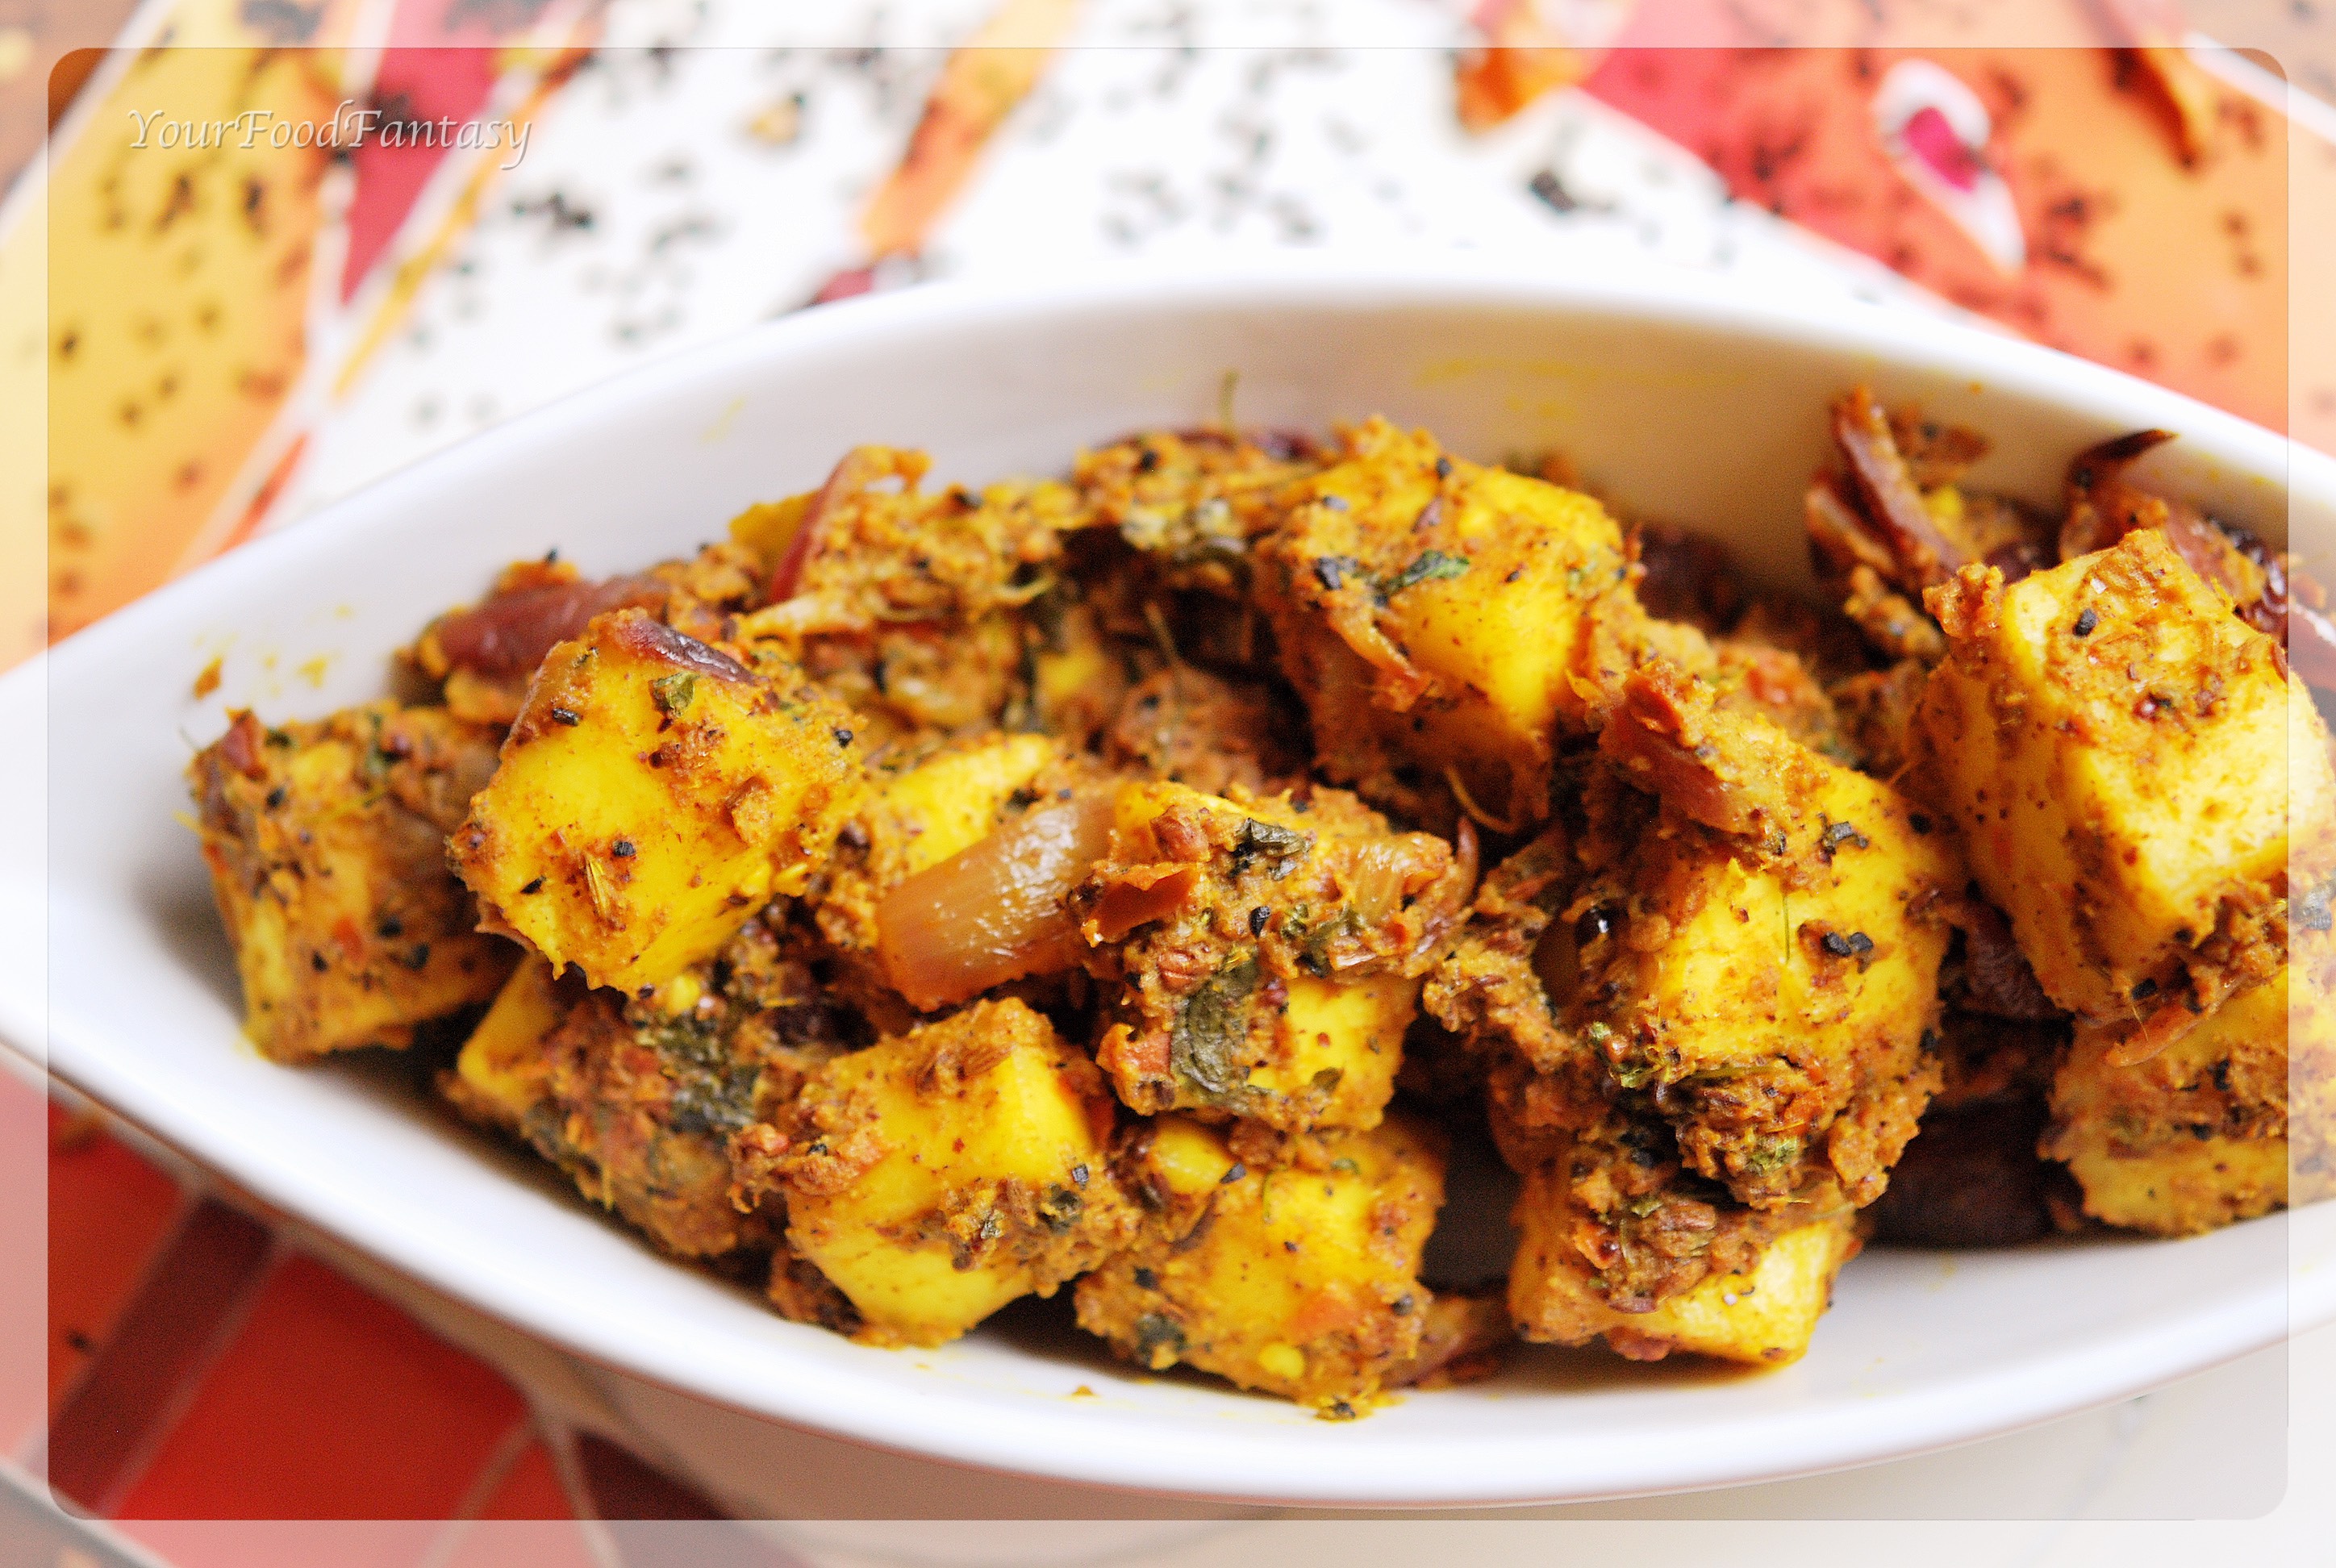 masala paneer recipe | yourfoodfantasy.com by meenu gupta